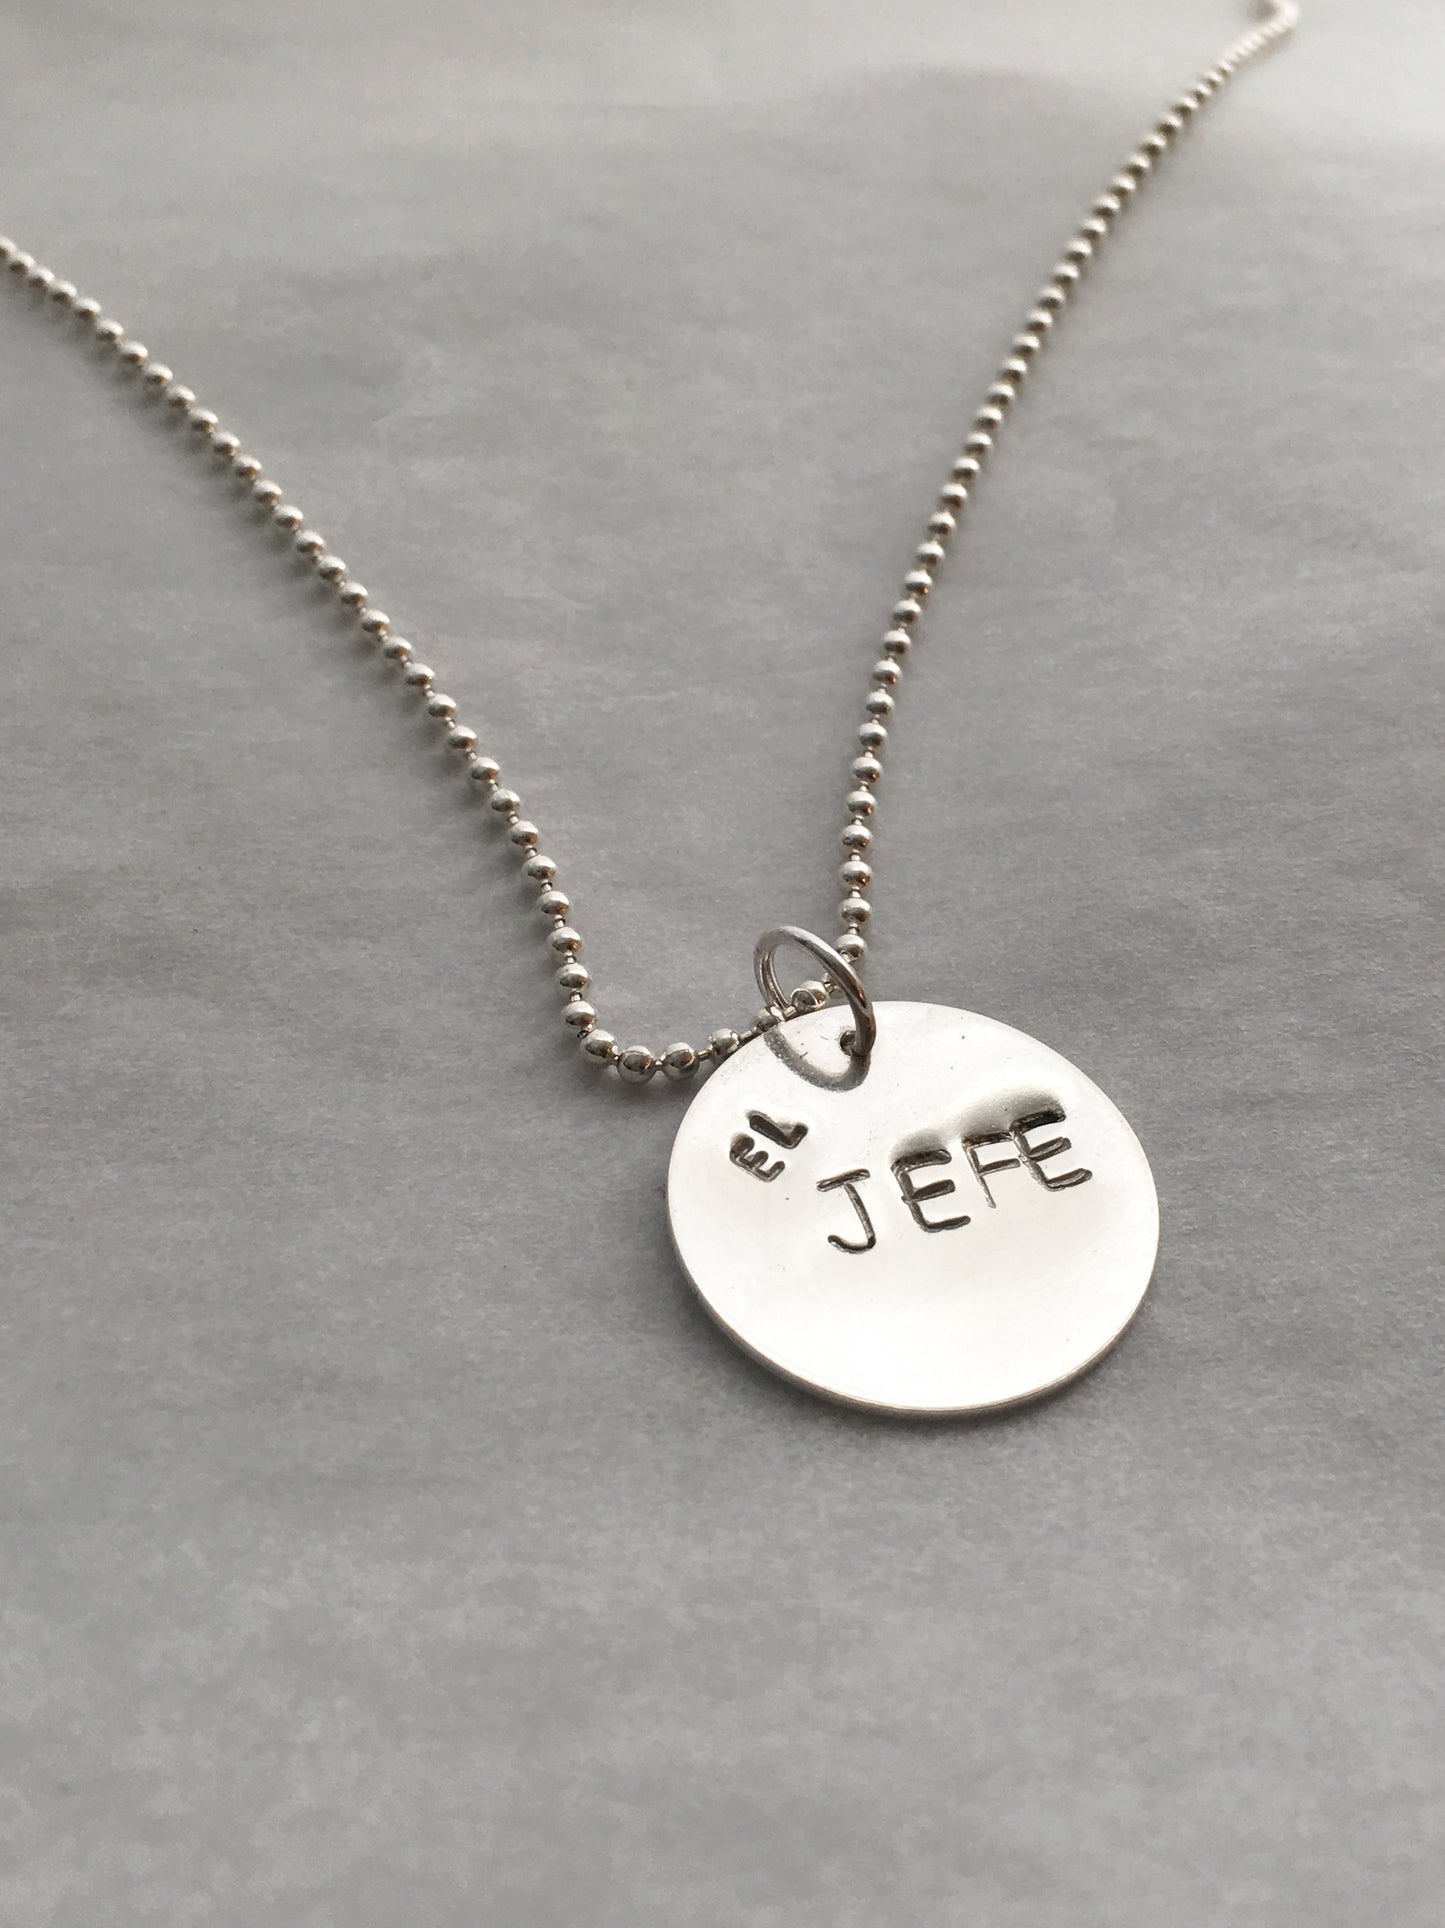 Handstamped El Jefe Pendant Necklace with Bead Chain